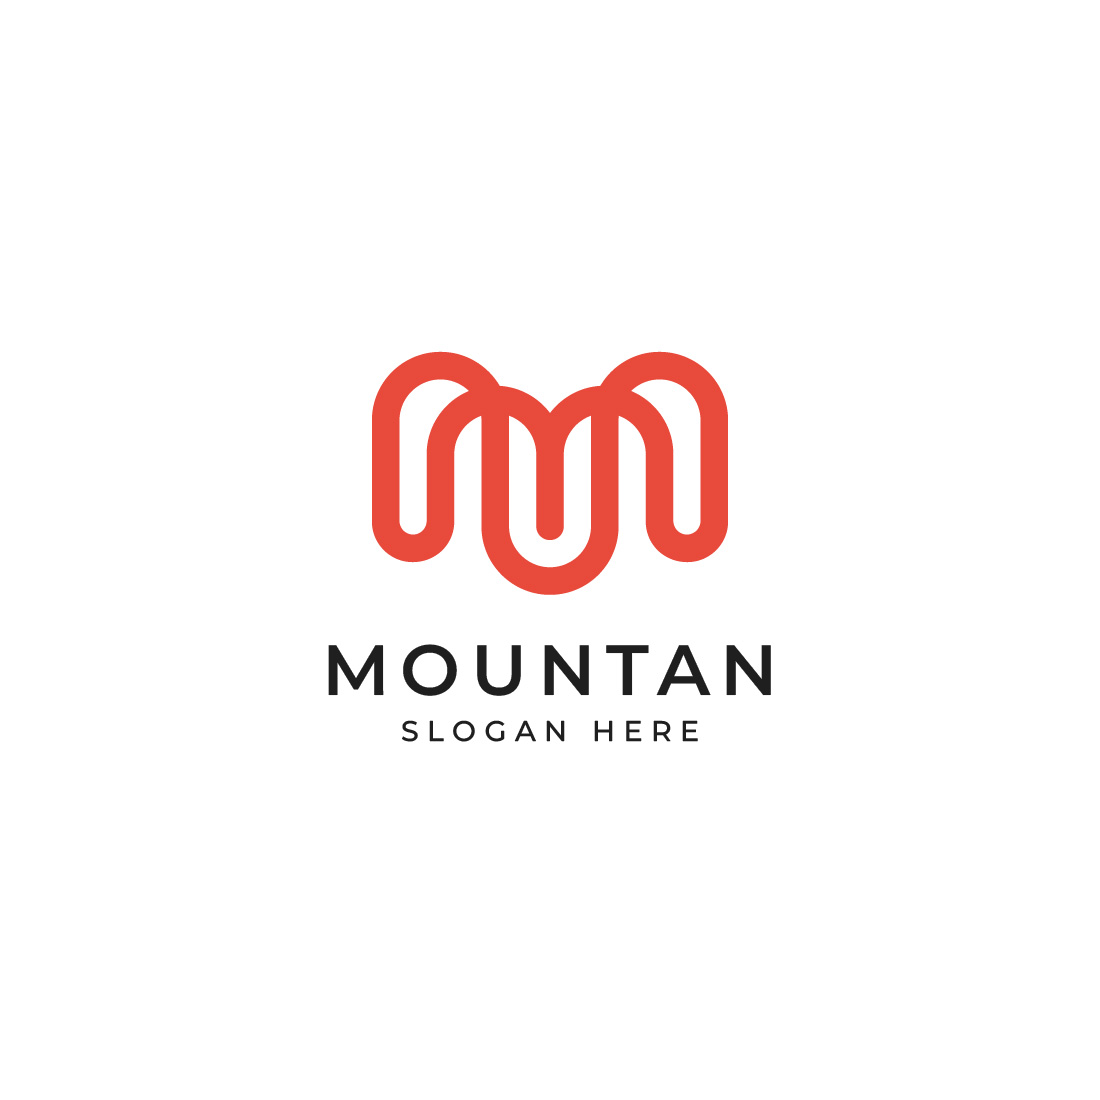 Mountan M Letter Logo cover image.